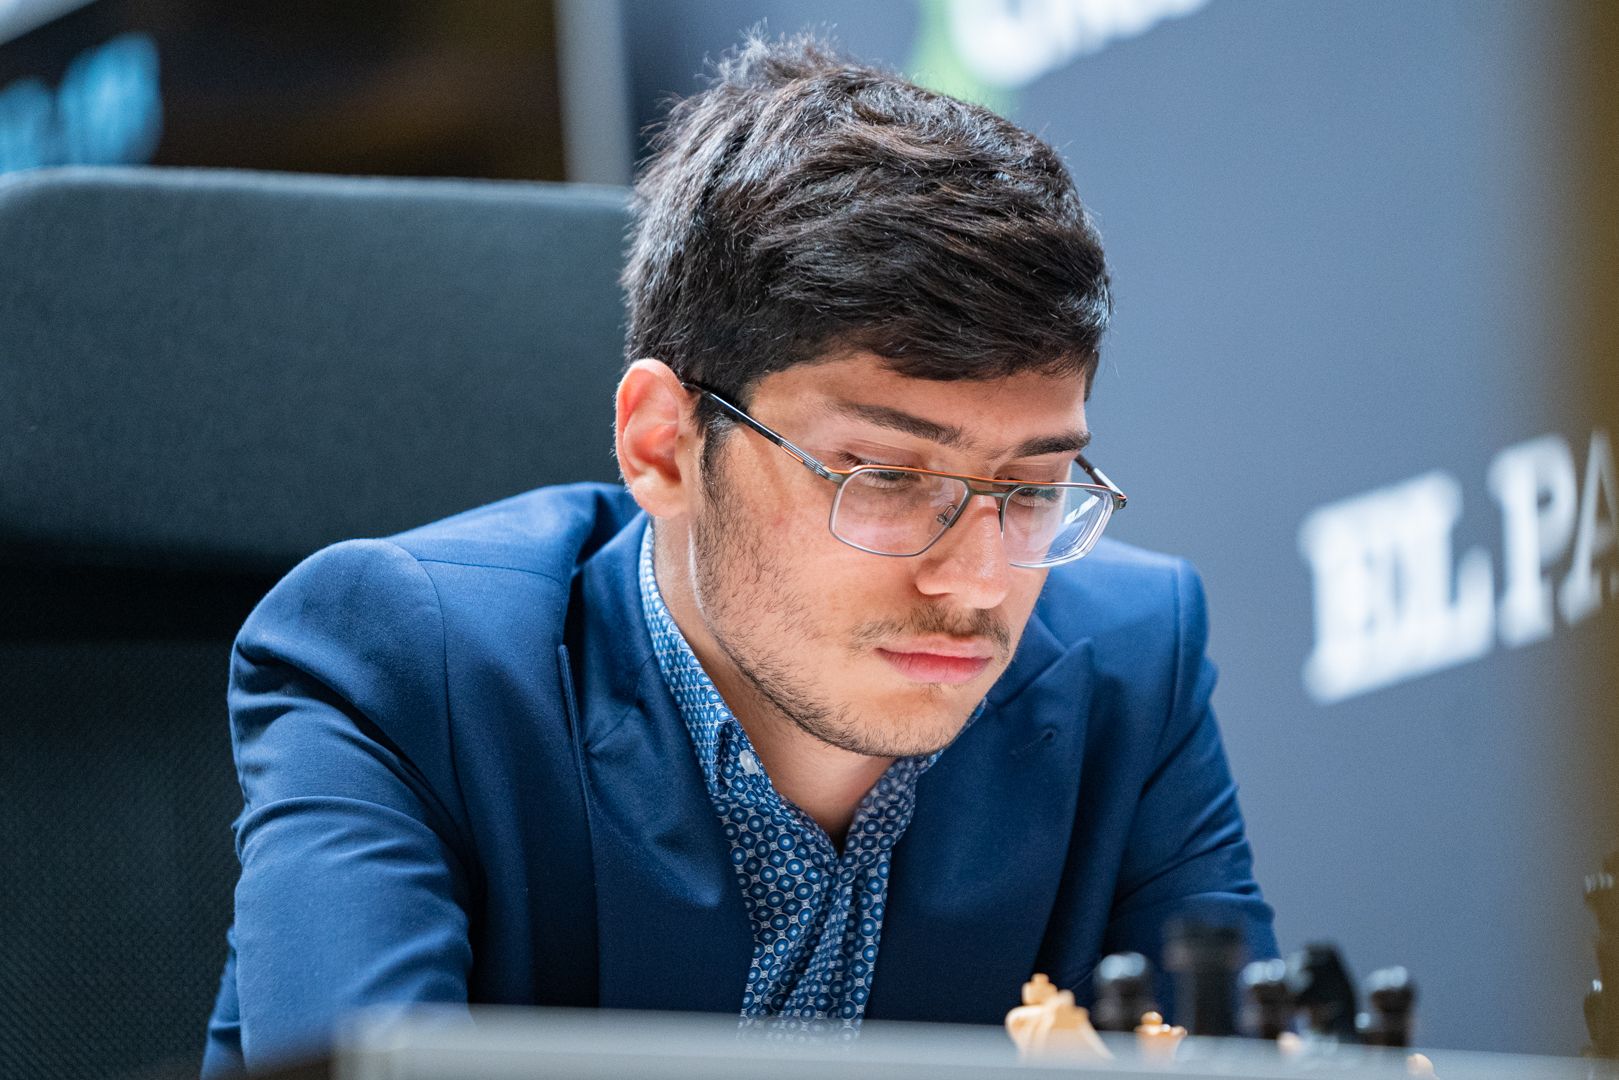 European Chess Union on X: FIDE Candidates 2022 9th round